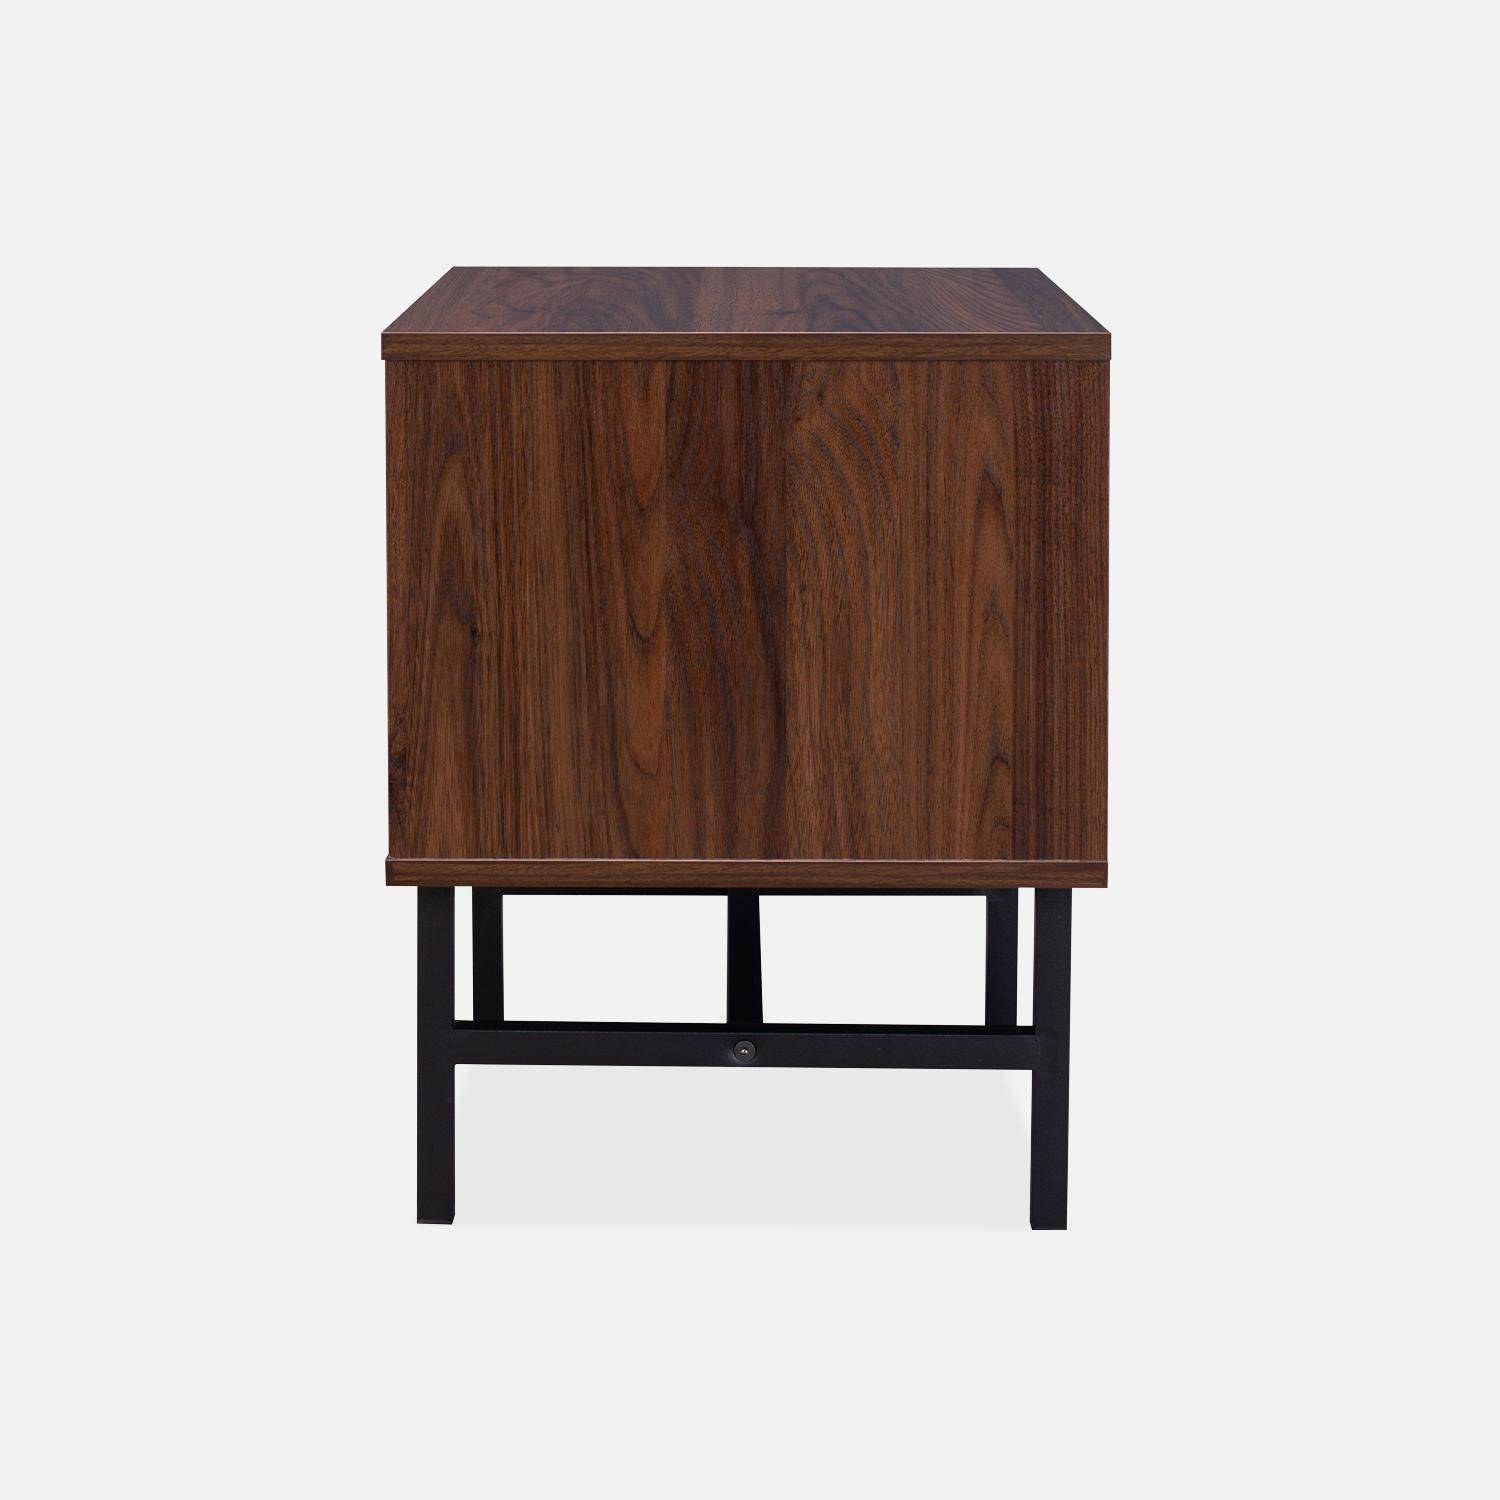 Set of 2 dark wood effect bedside tables, one drawer, L 48 x W 39 x H 50cm Photo6